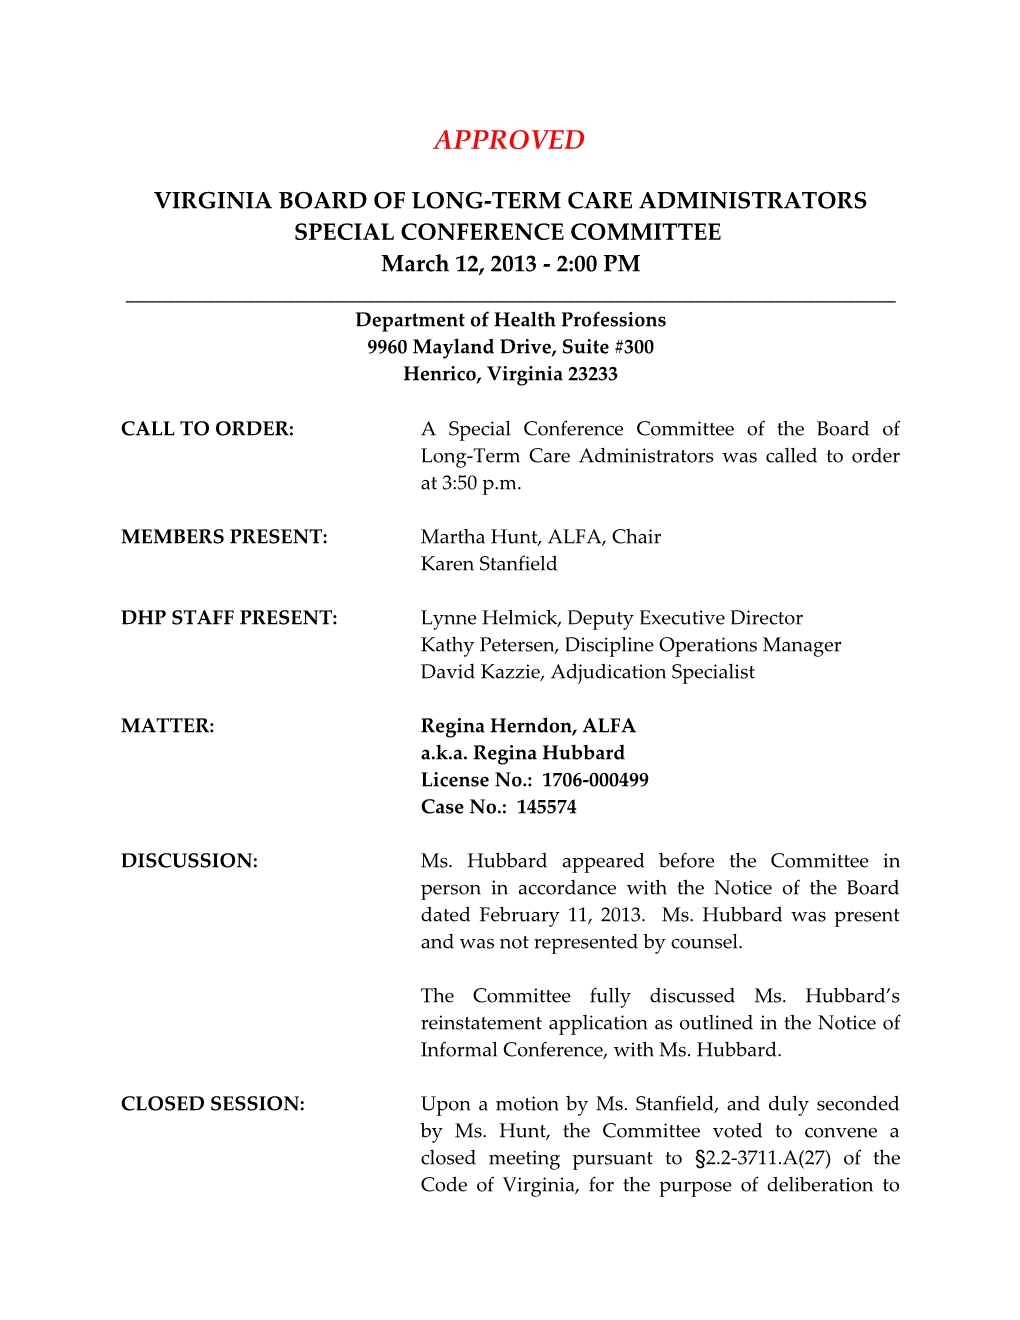 Virginia Board of Long-Term Care Administrators s1